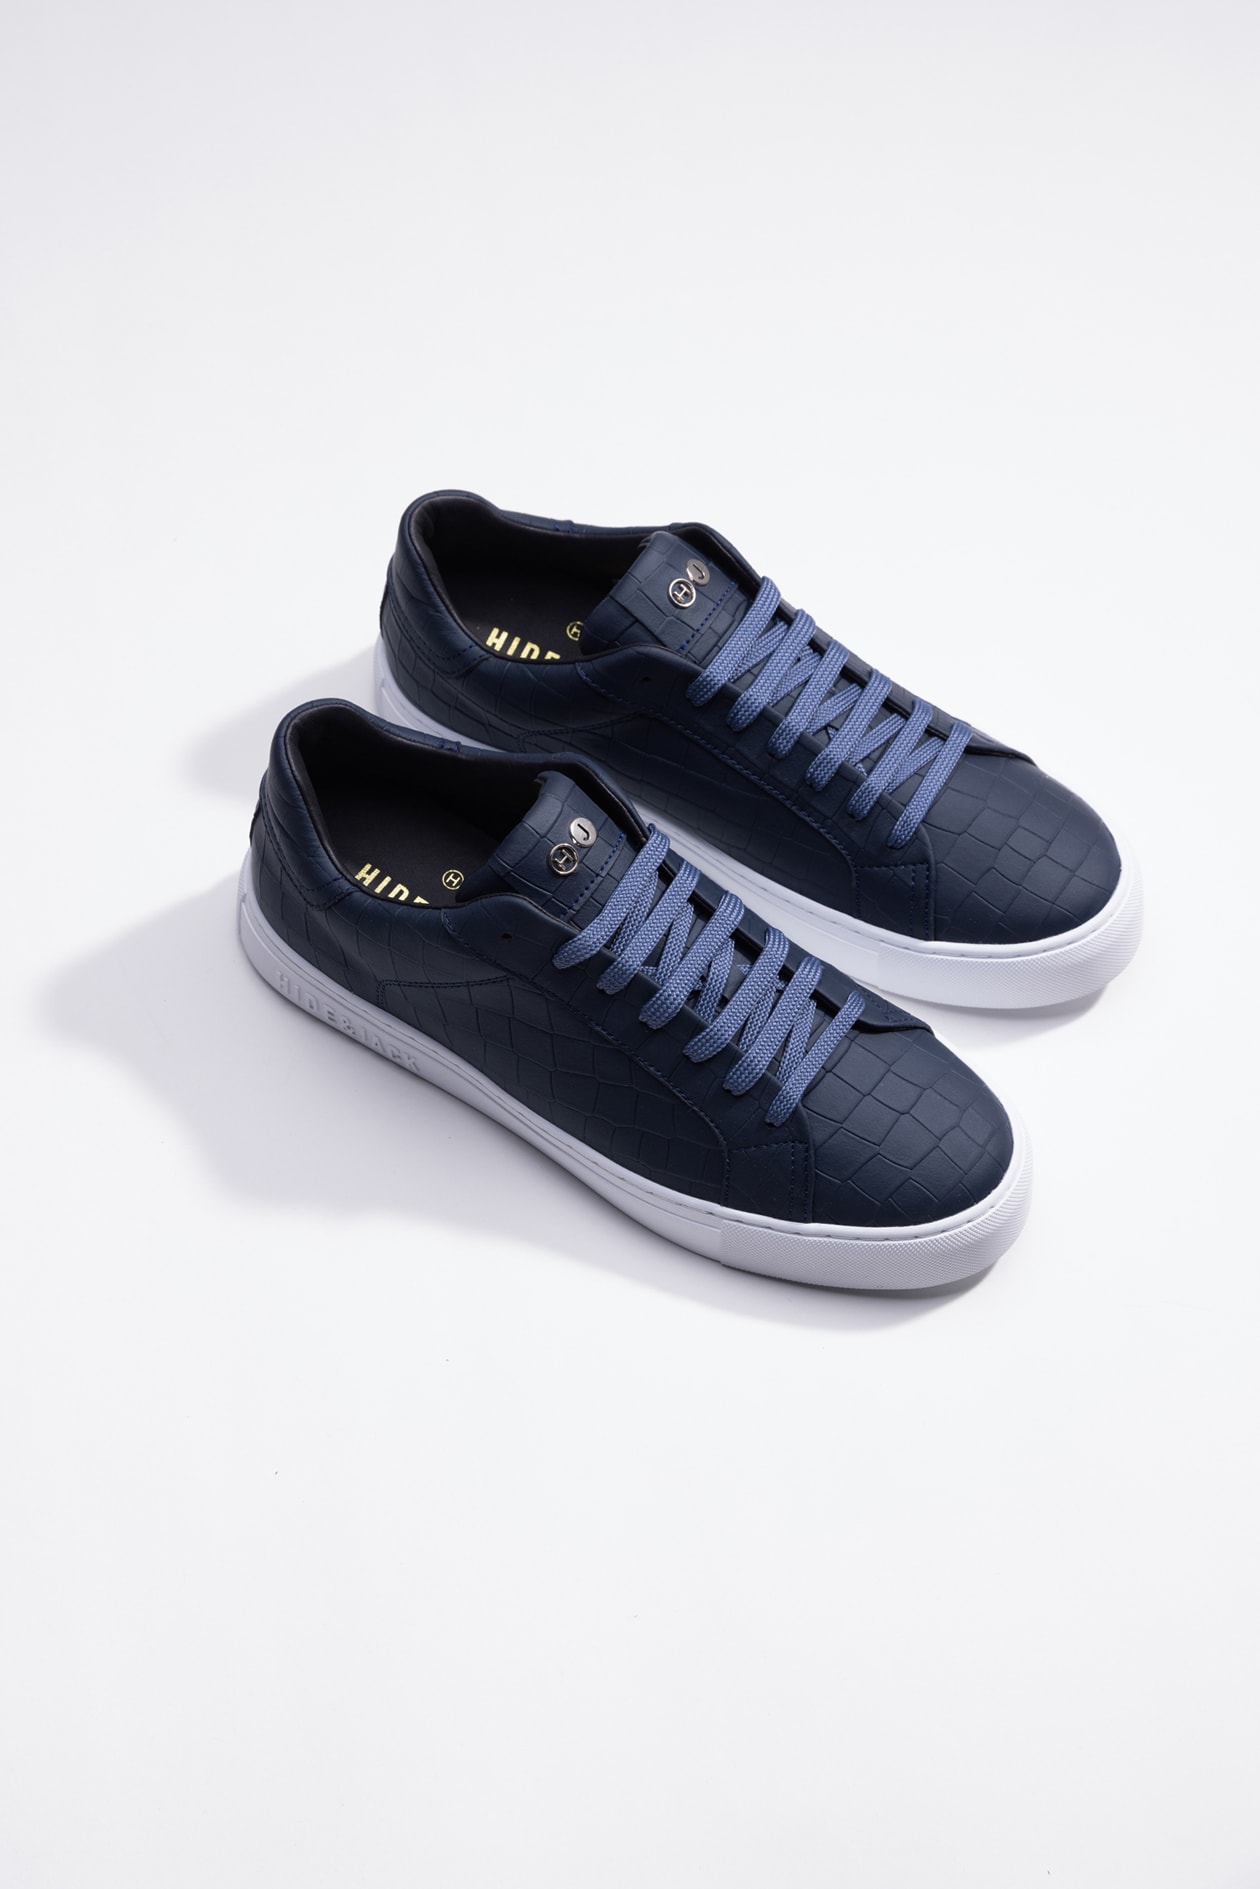 Hide&amp;jack Low Top Sneaker - Essence Blue White